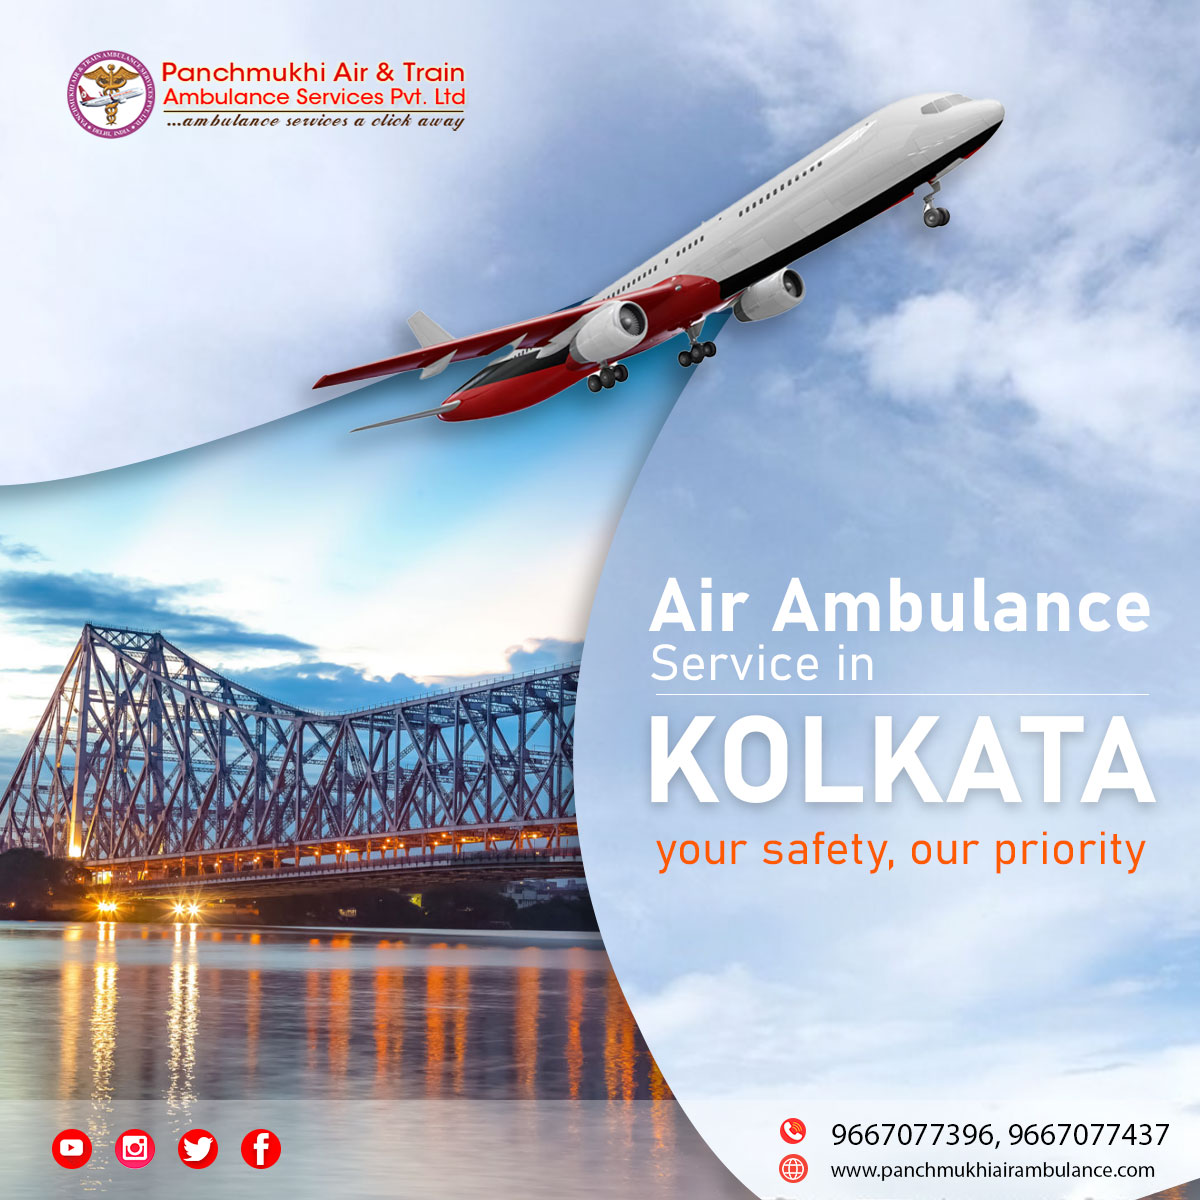 New Charter Air Ambulance Services in Kolkata